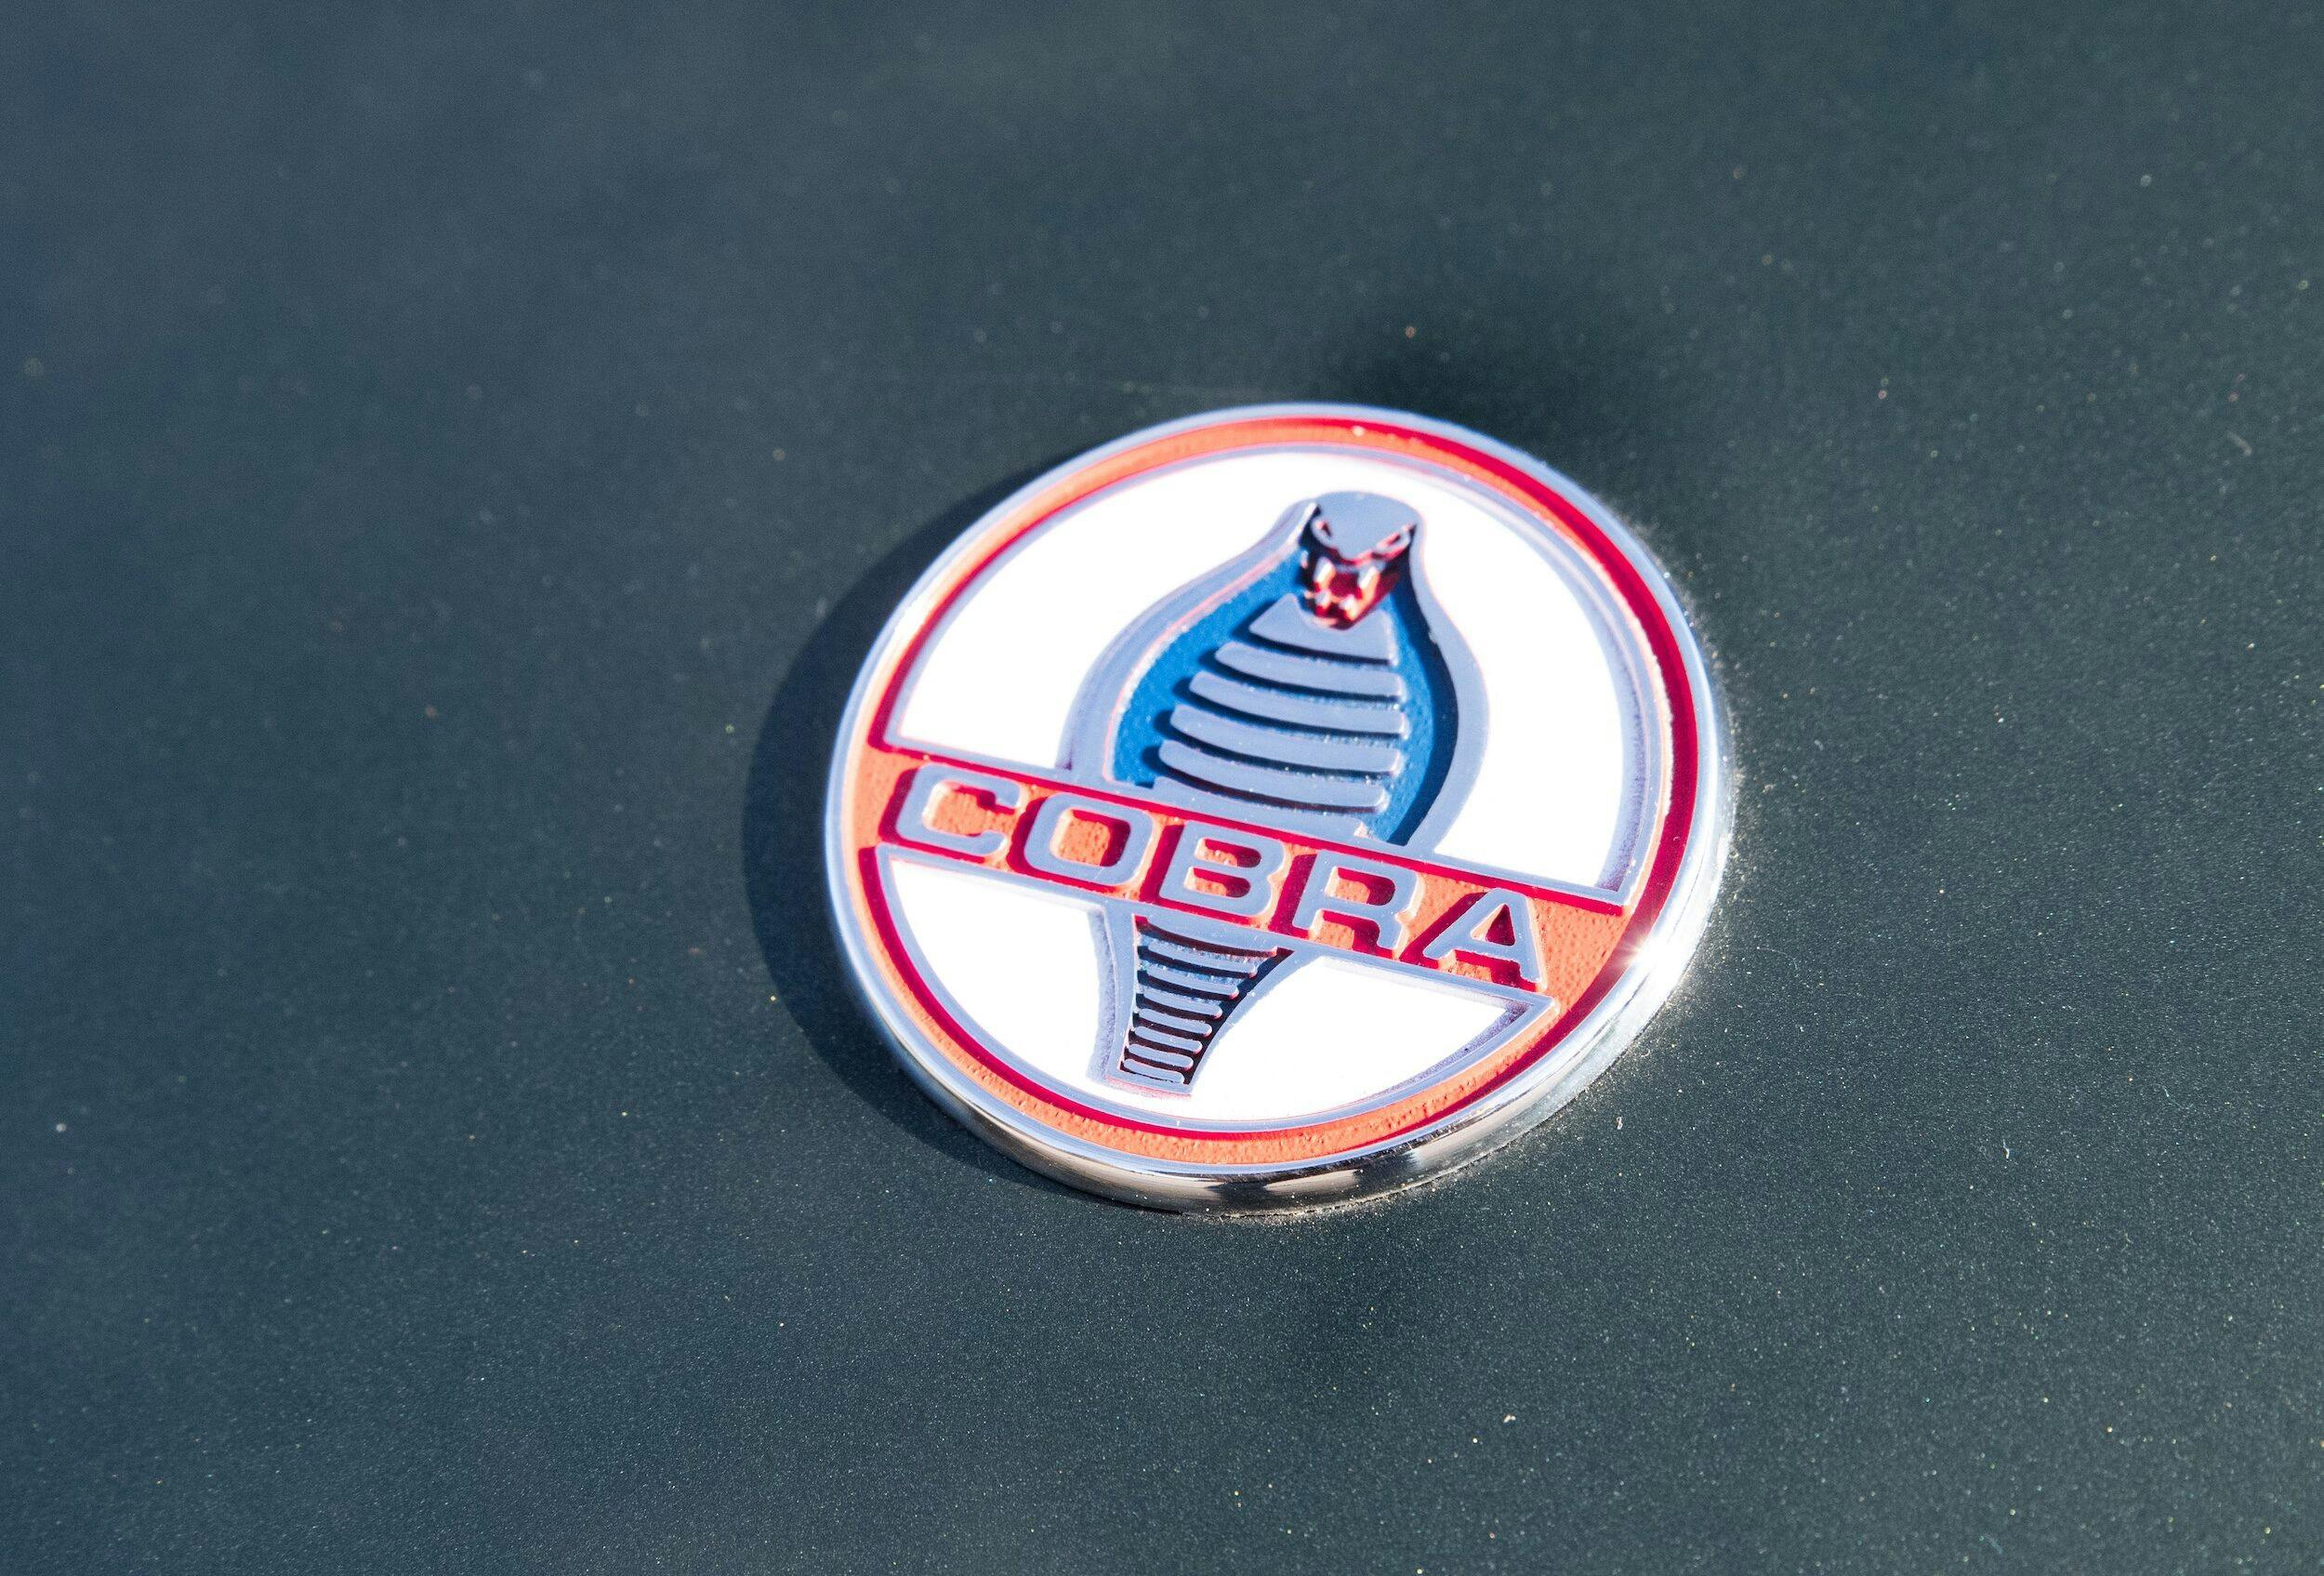 1964 Shelby Cobra emblem